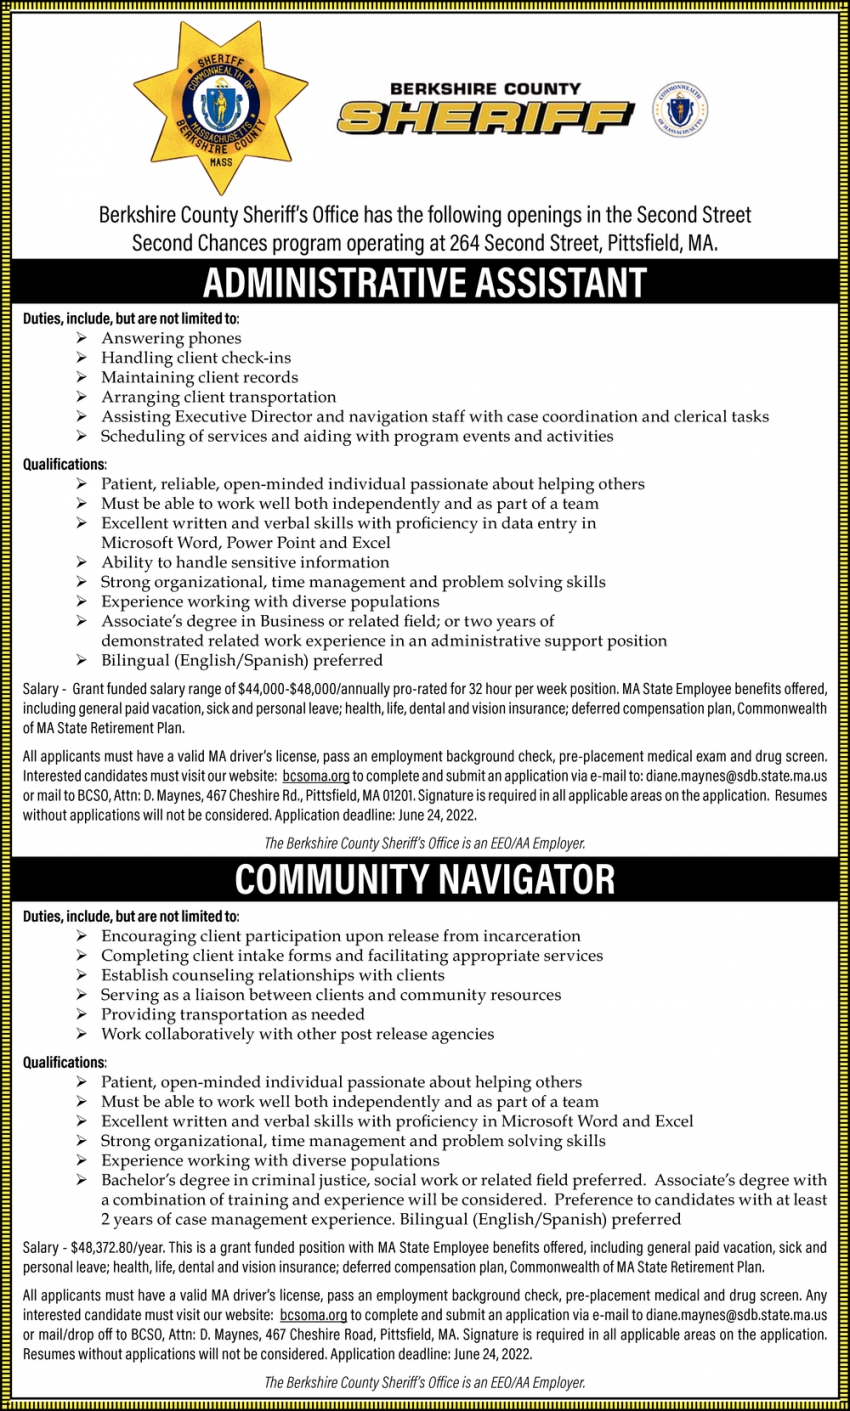 Administrative Assistant - Community Navigator